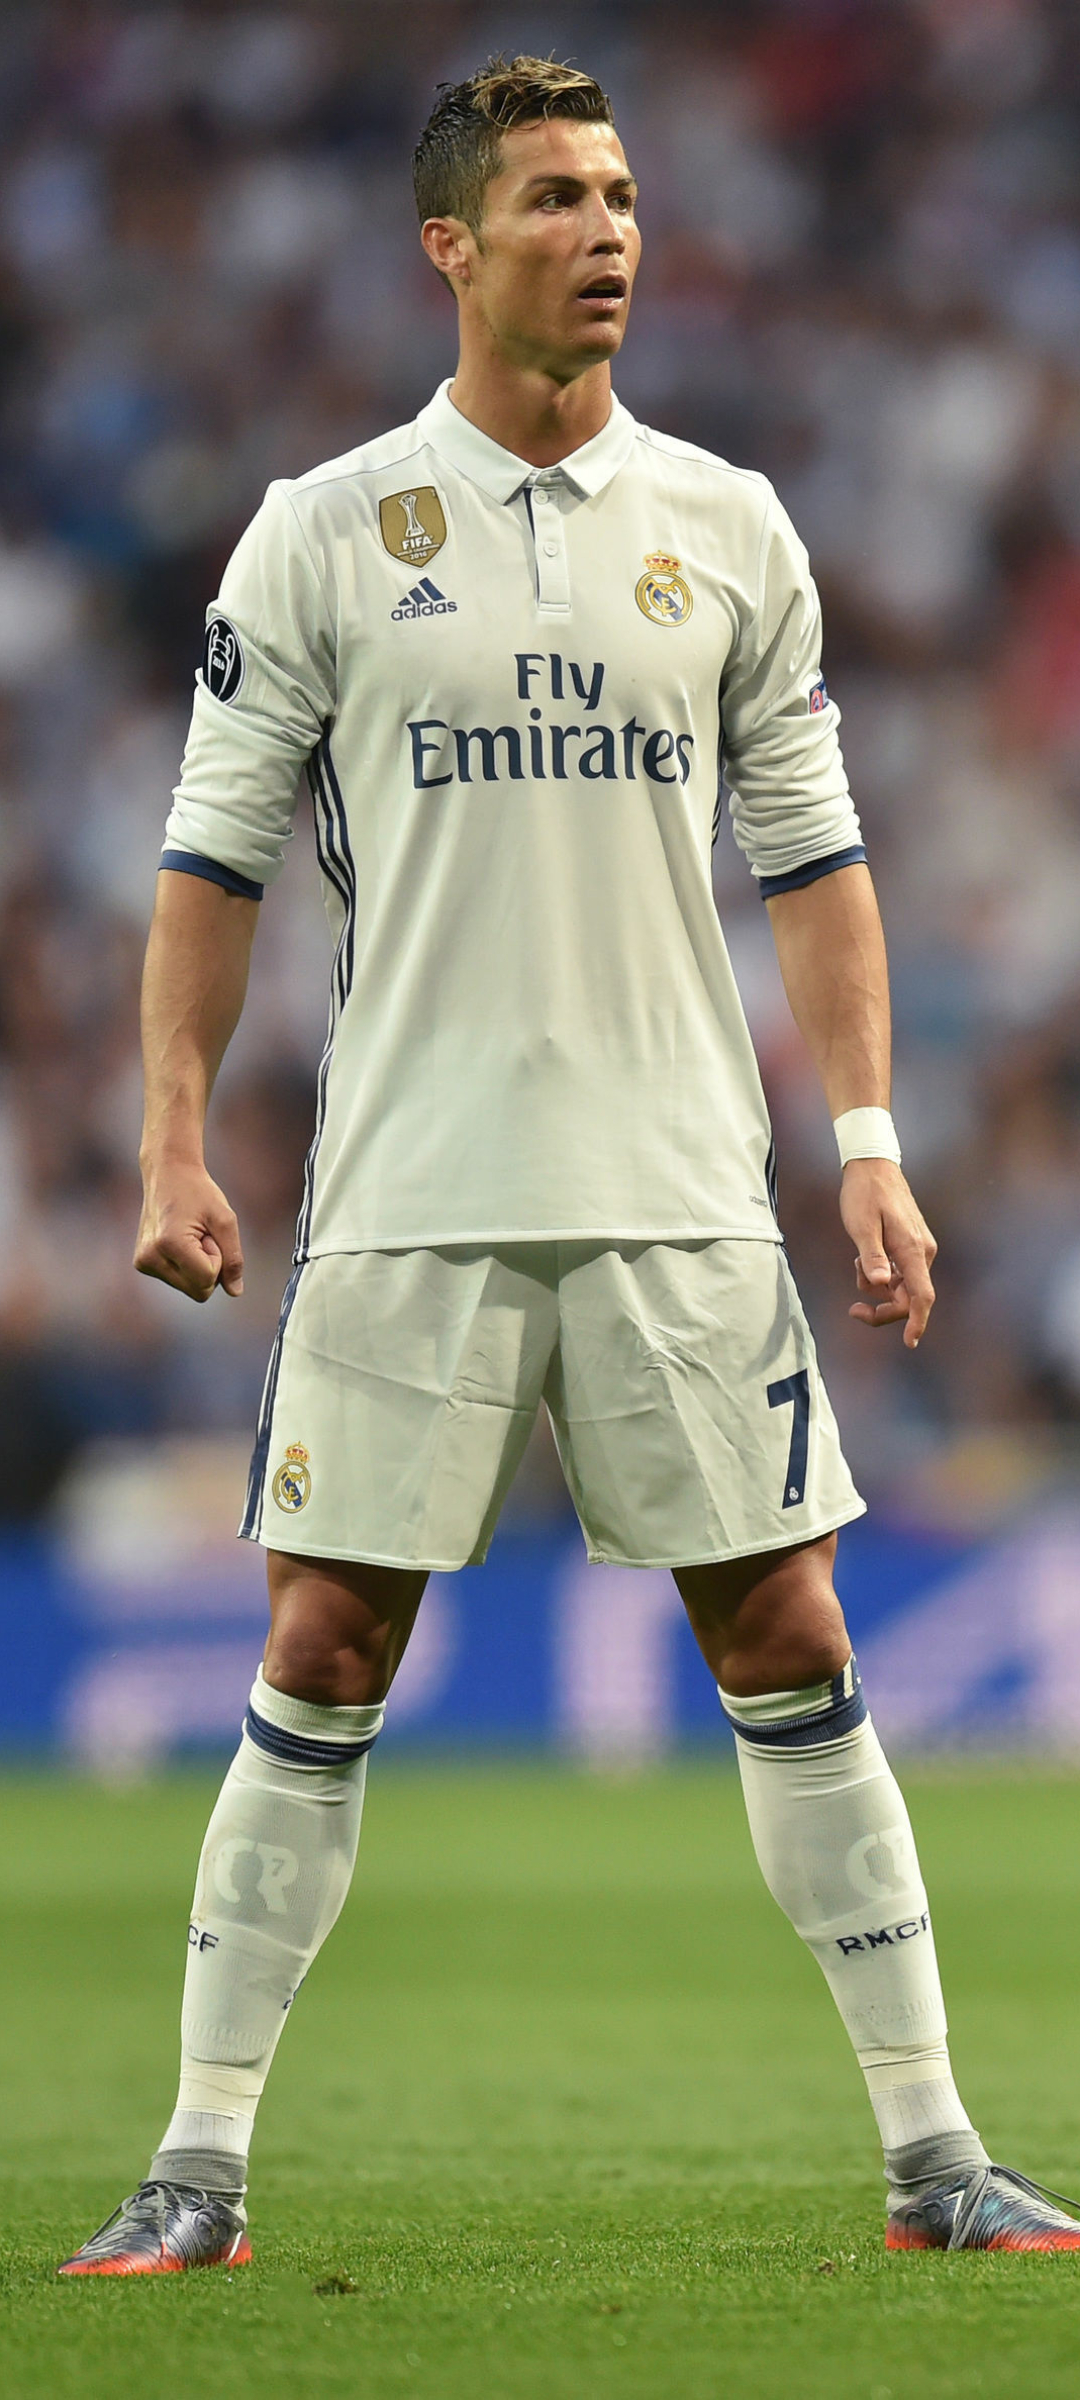 Ronaldo Real Madrid Wallpaper Apk Download for Android Latest version  128 comkanashronaldorealmadridwallpaper